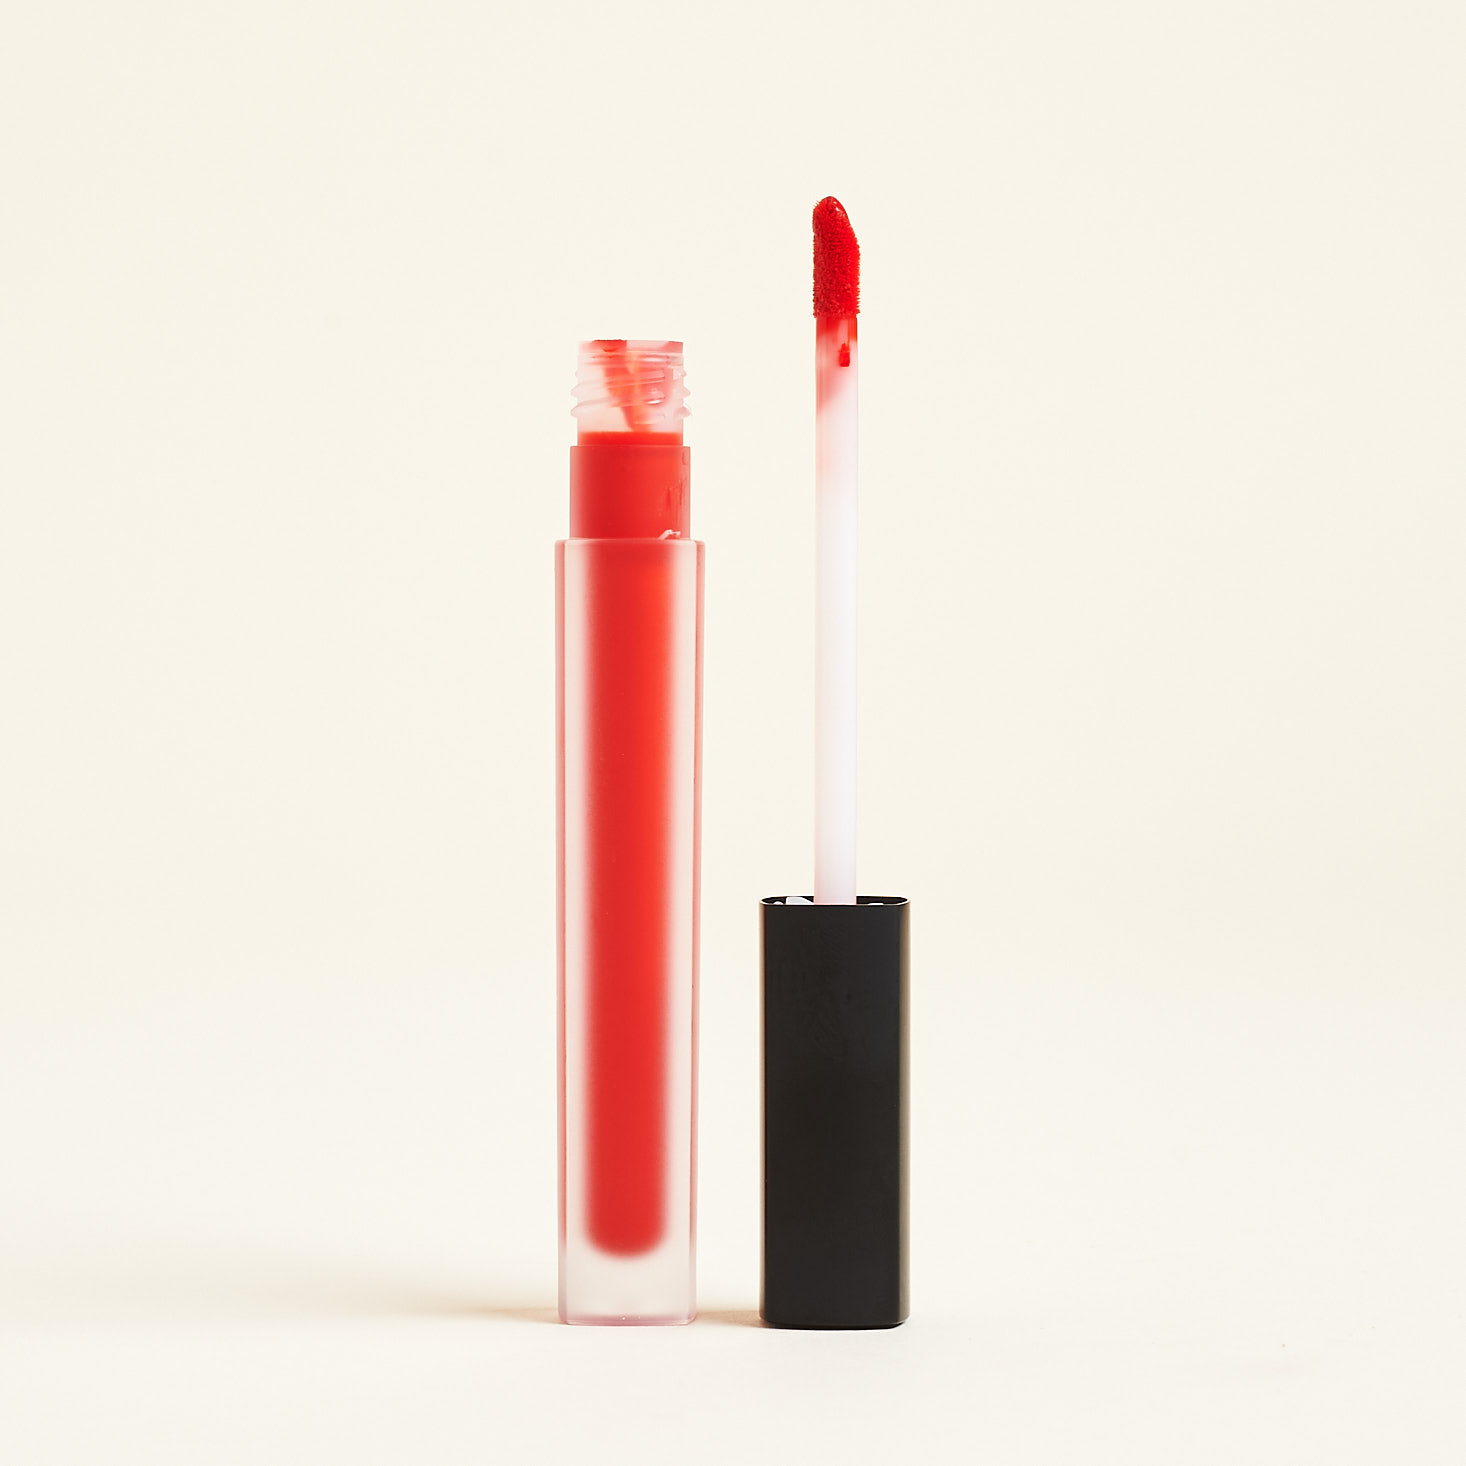 huda beauty lipstick open, to display doe foot applicator